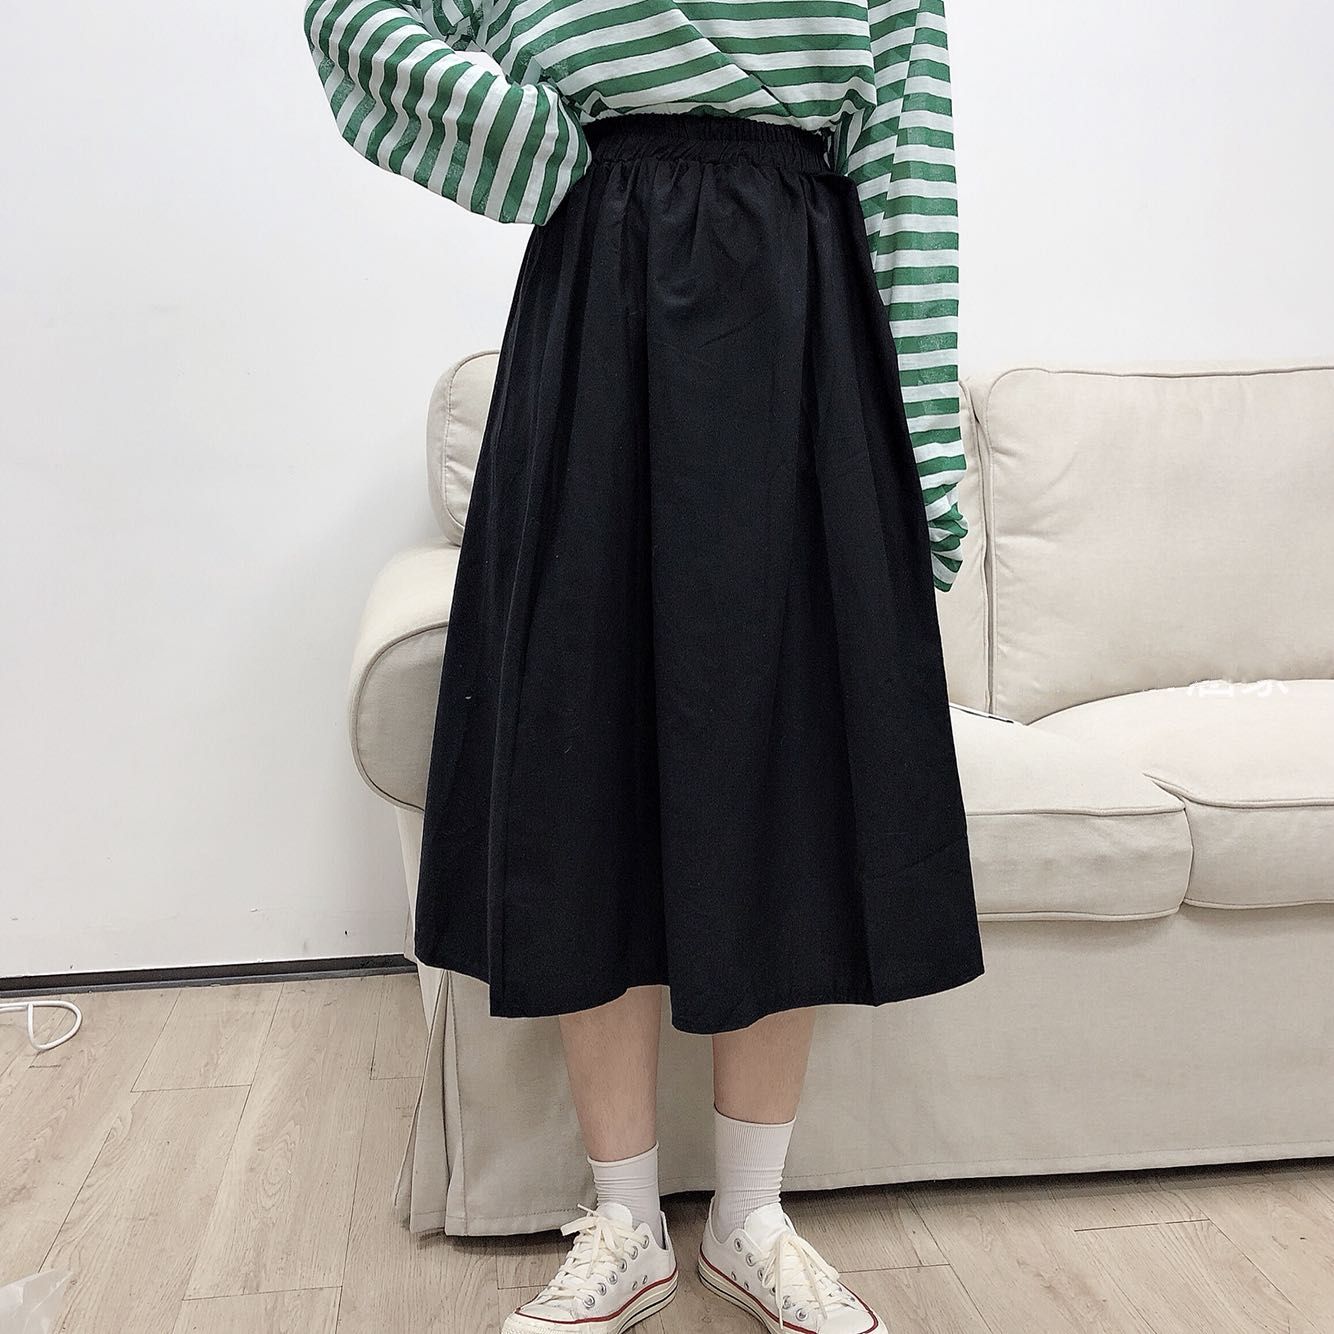 Japanese skirt, women's workwear skirt, autumn and winter high-waisted pleated skirt, A-line umbrella skirt, student mid-length knee-high white skirt